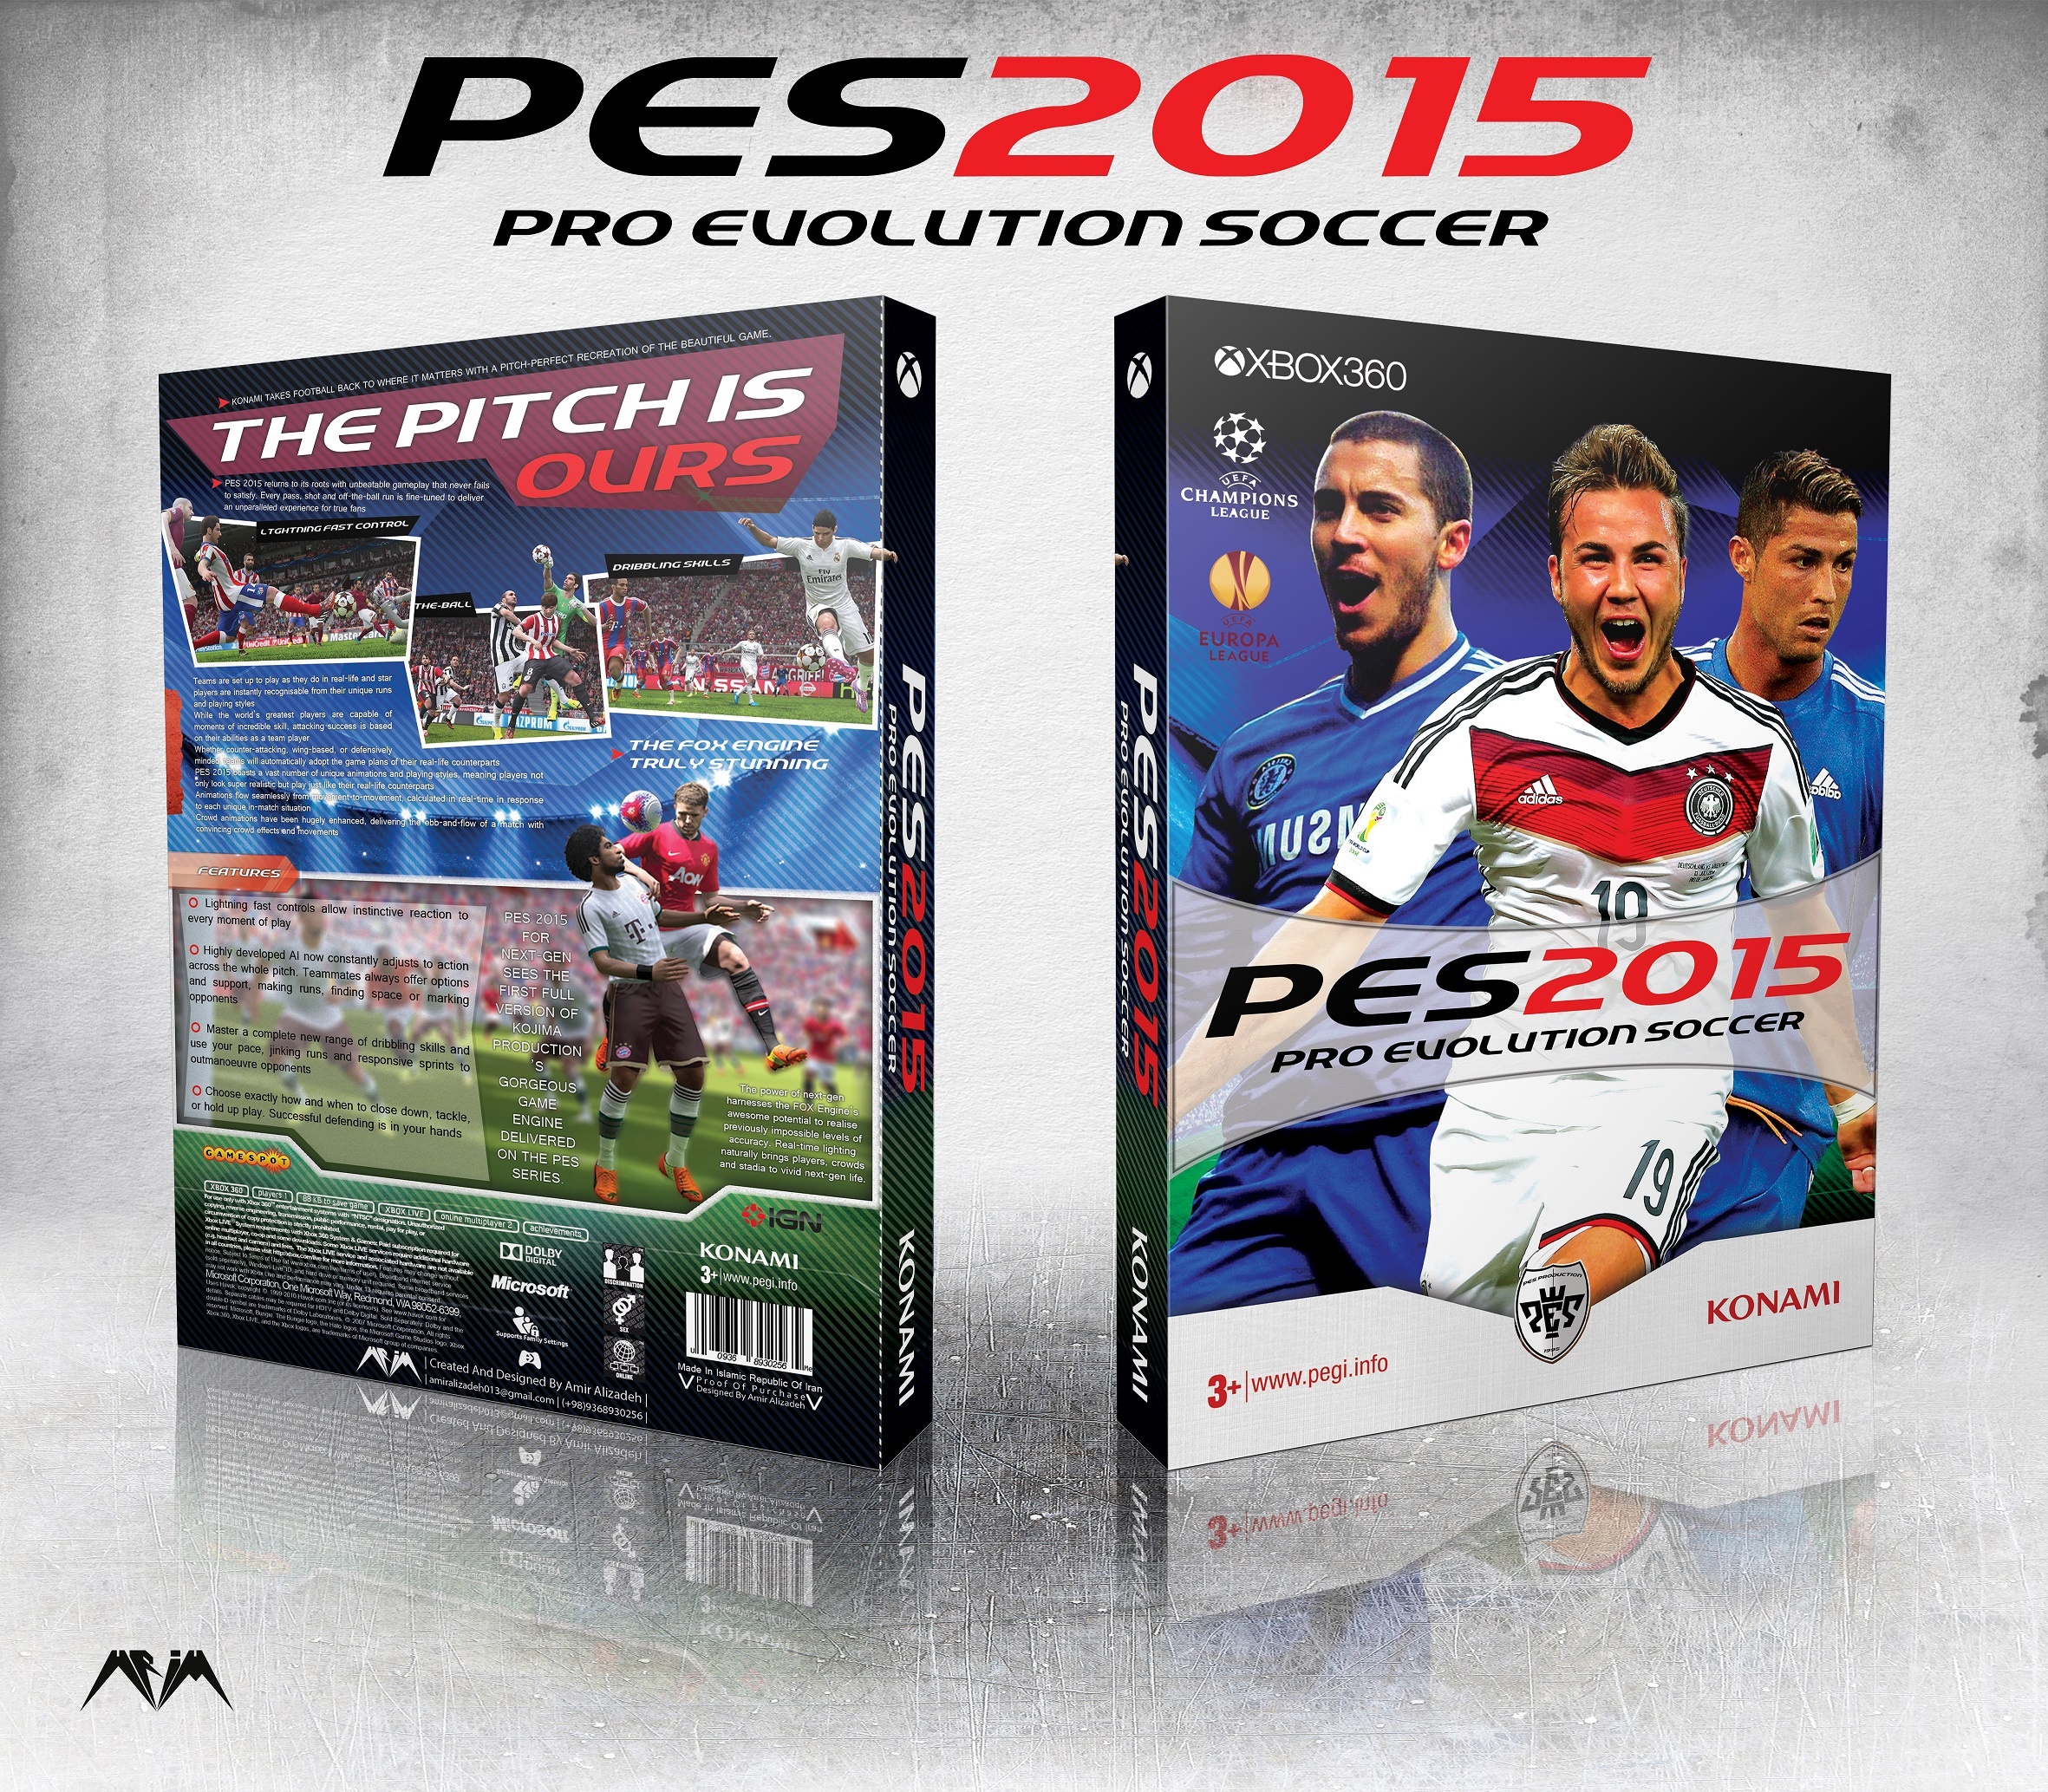 Pro Evolution Soccer 2015 box cover